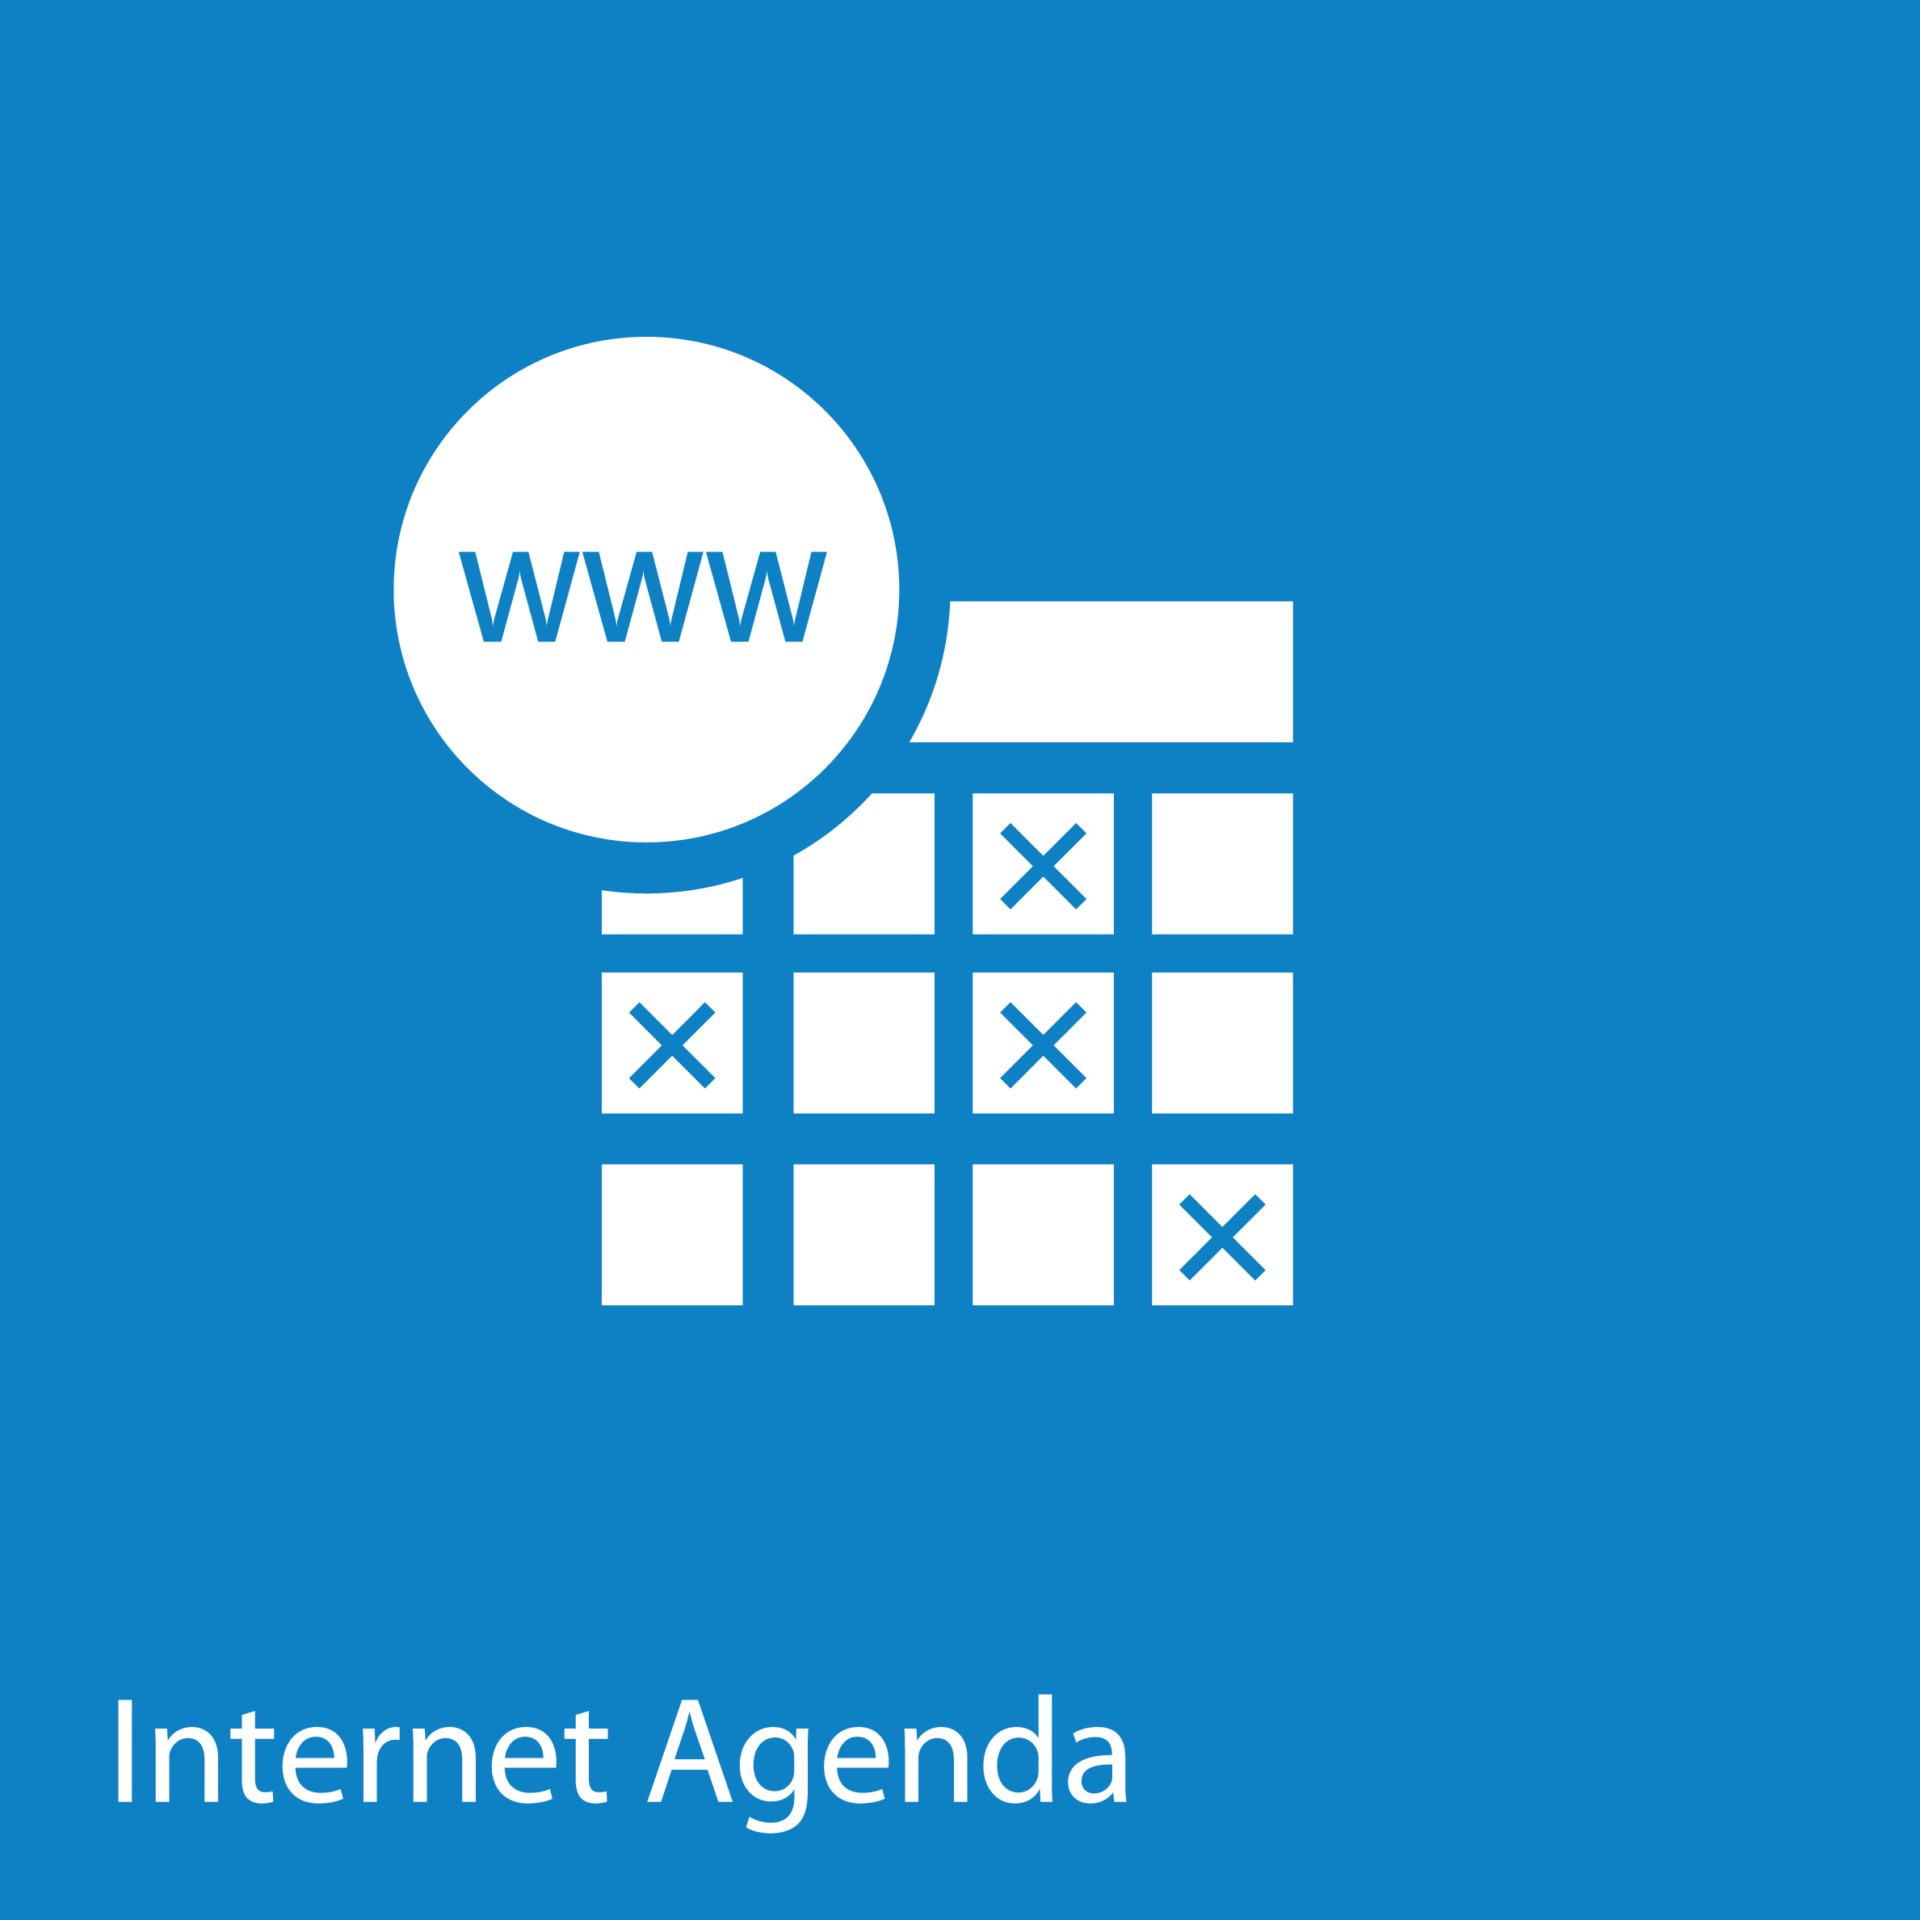 Vertimart-Internet-agenda-819d85